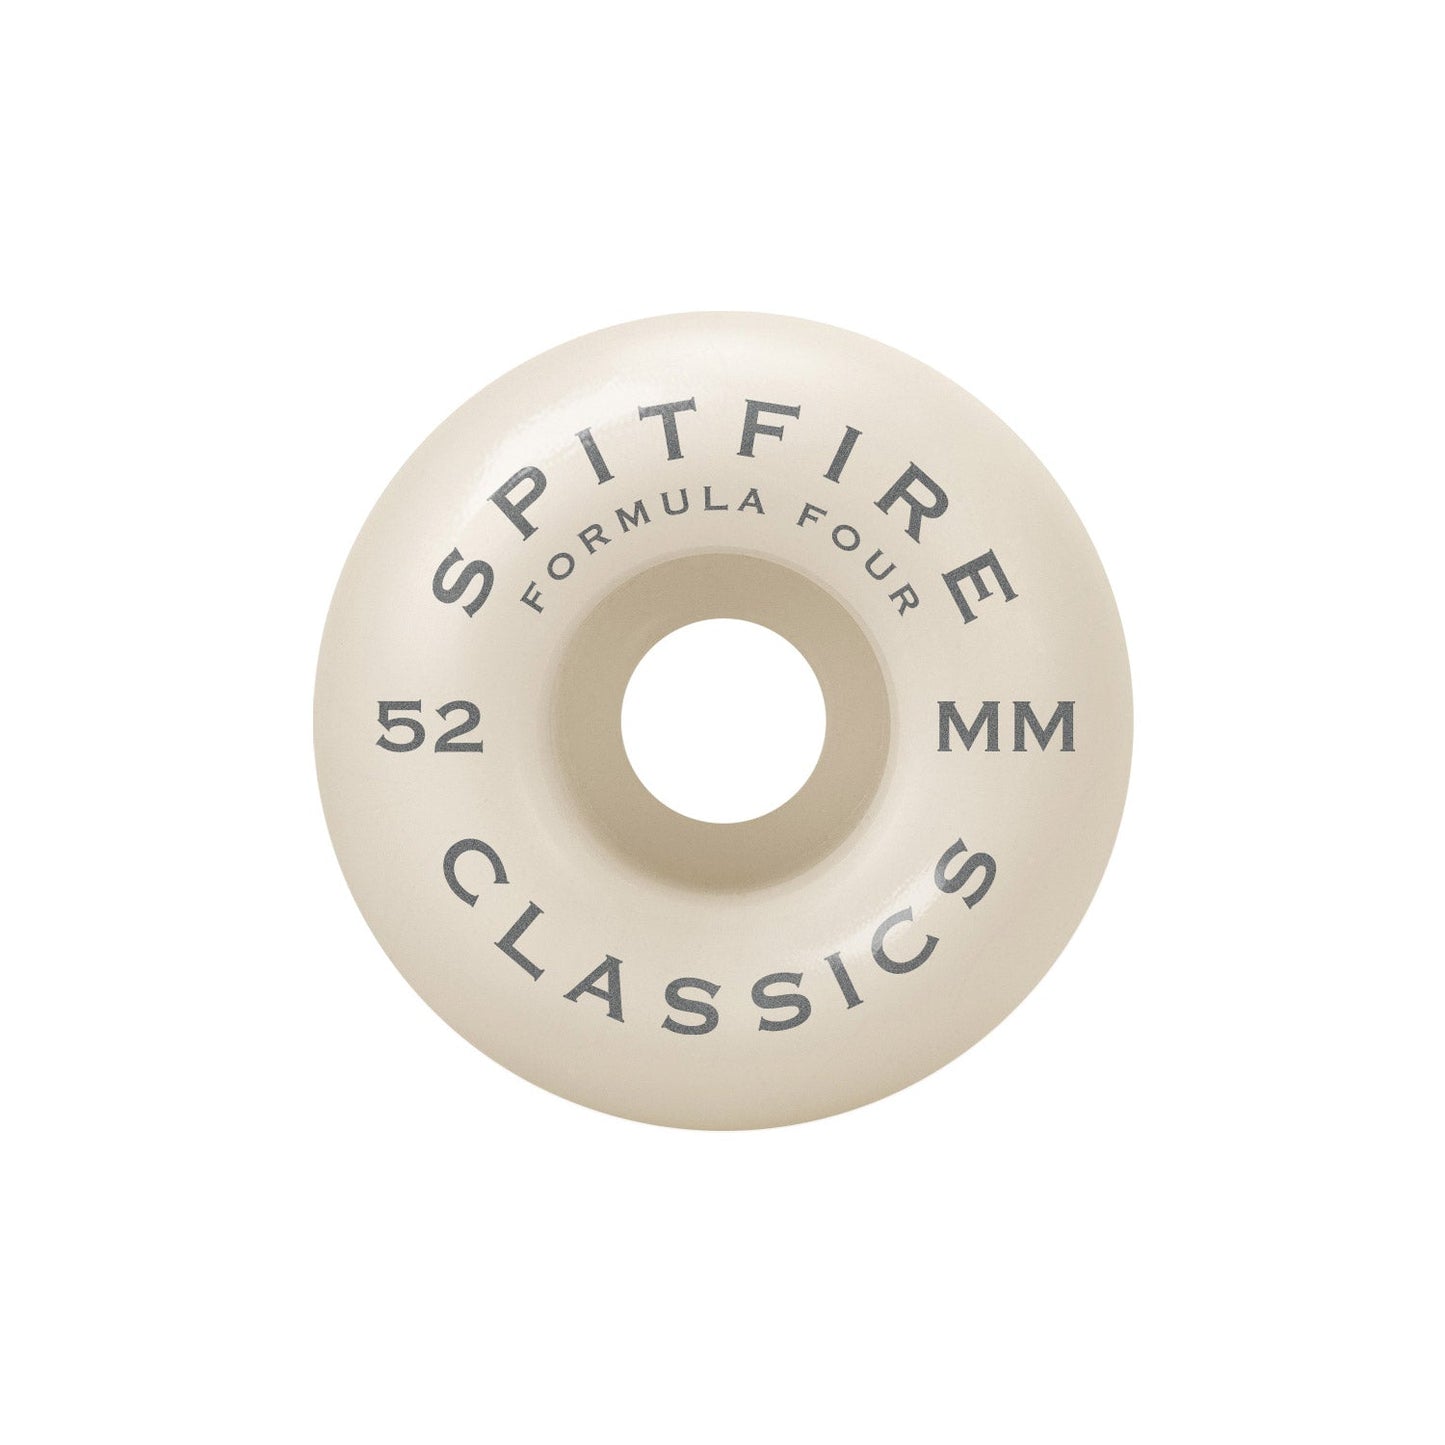 Spitfire Formula Four Classics wheel (99A, 52mm) - Tiki Room Skateboards - 2